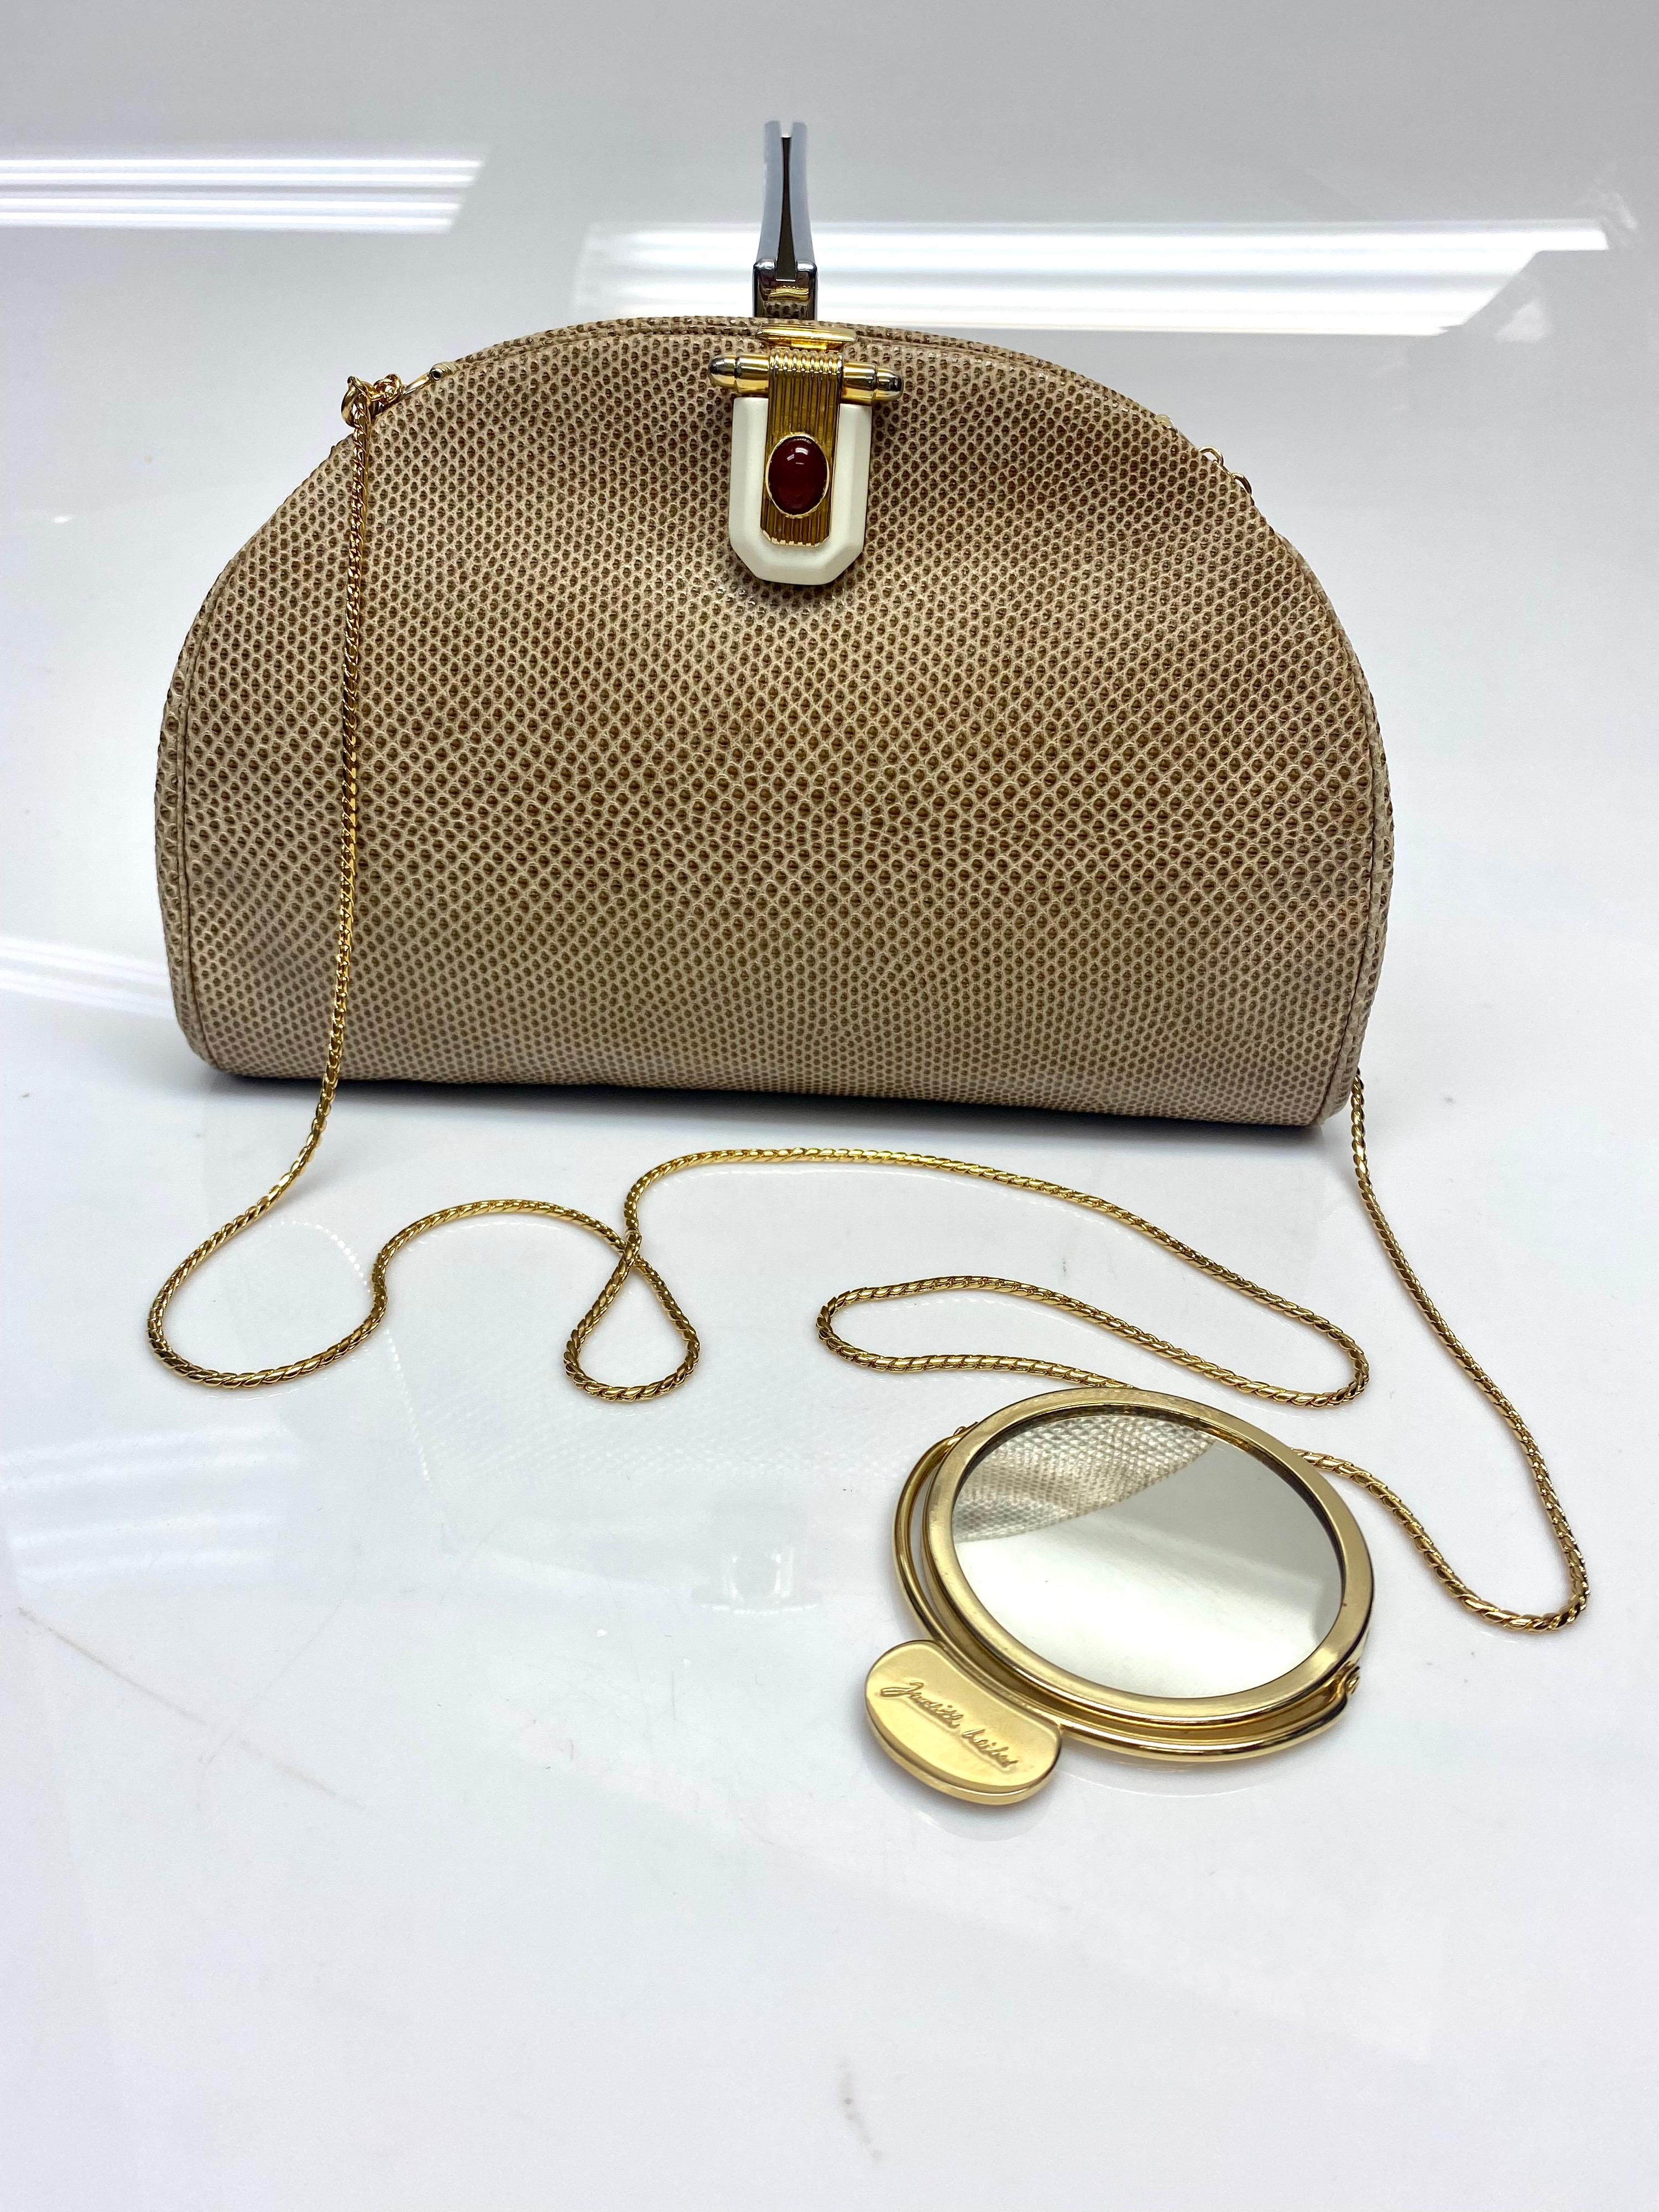 Judith Leiber Tan Karung Snake Handbag with Stone Buckle Front.  For Sale 3